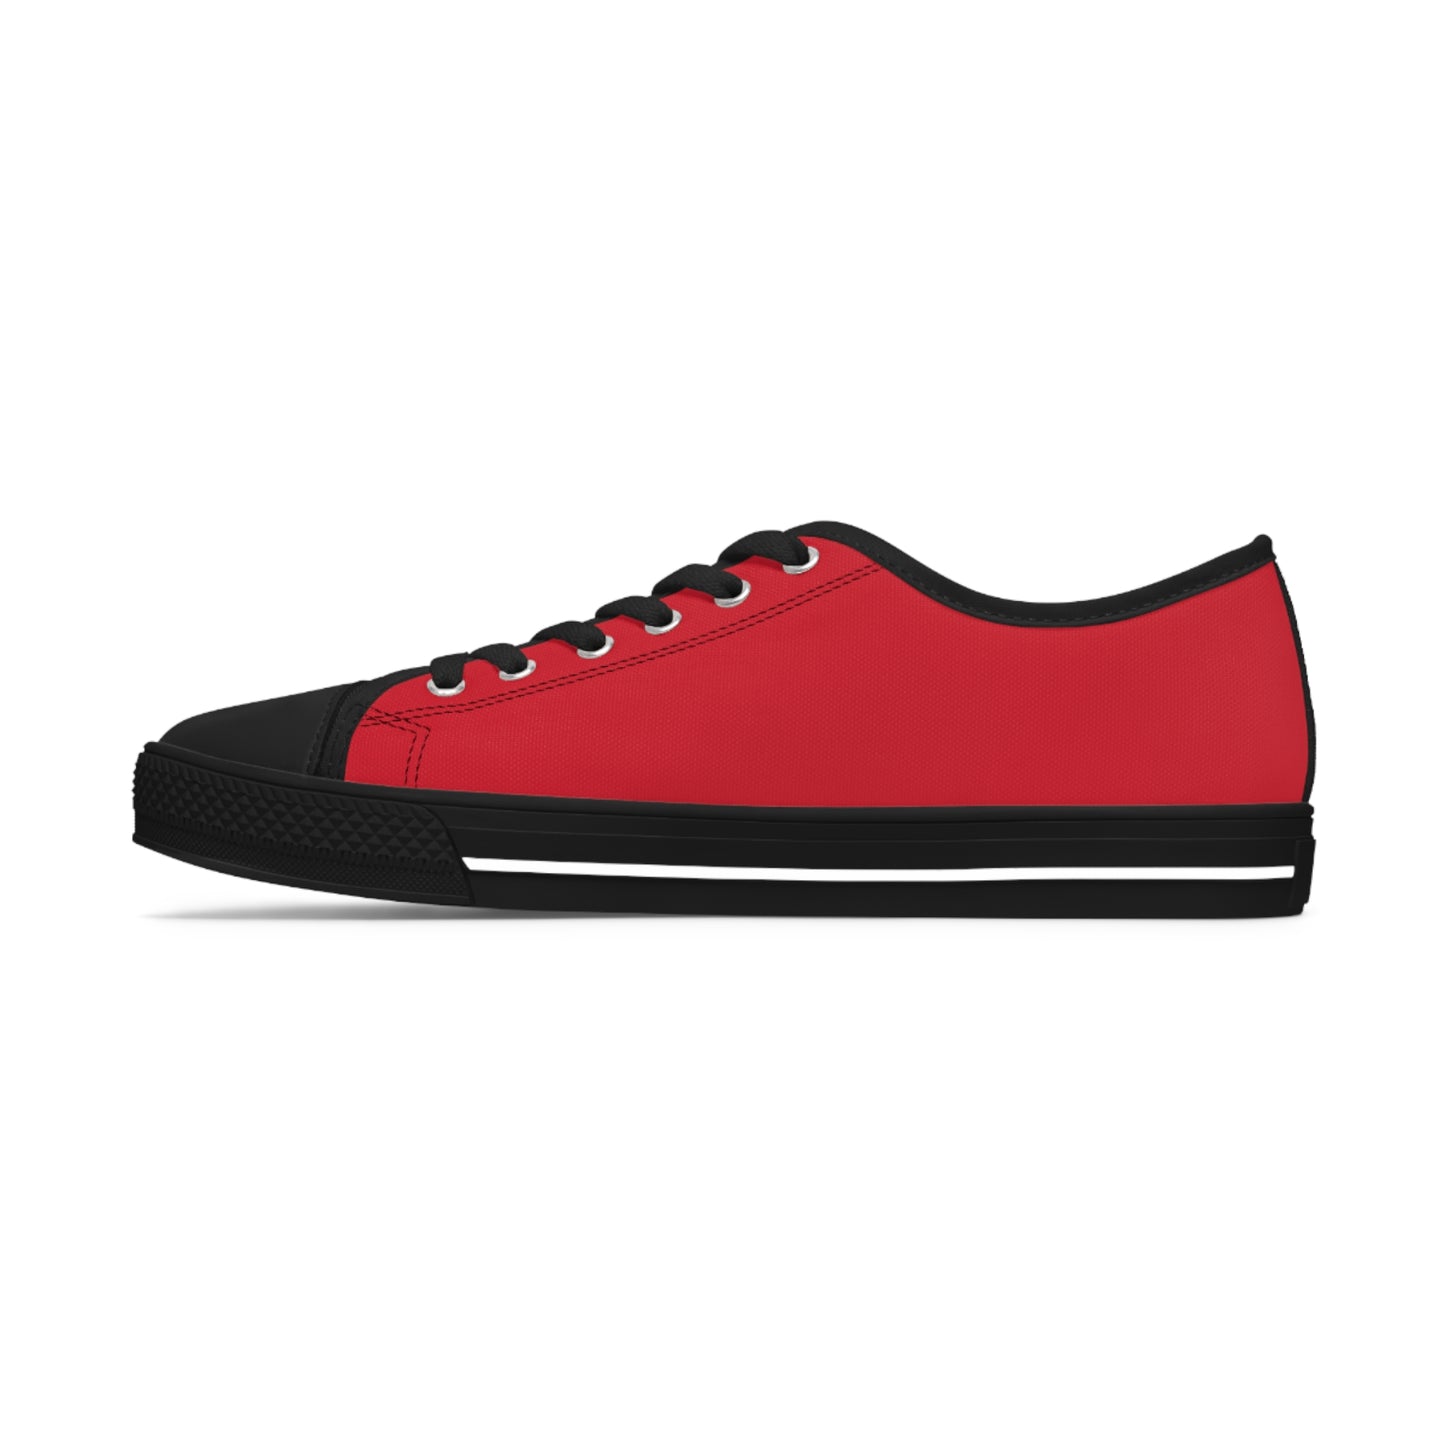 T4x Motivational Red Women's Low Top Sneakers